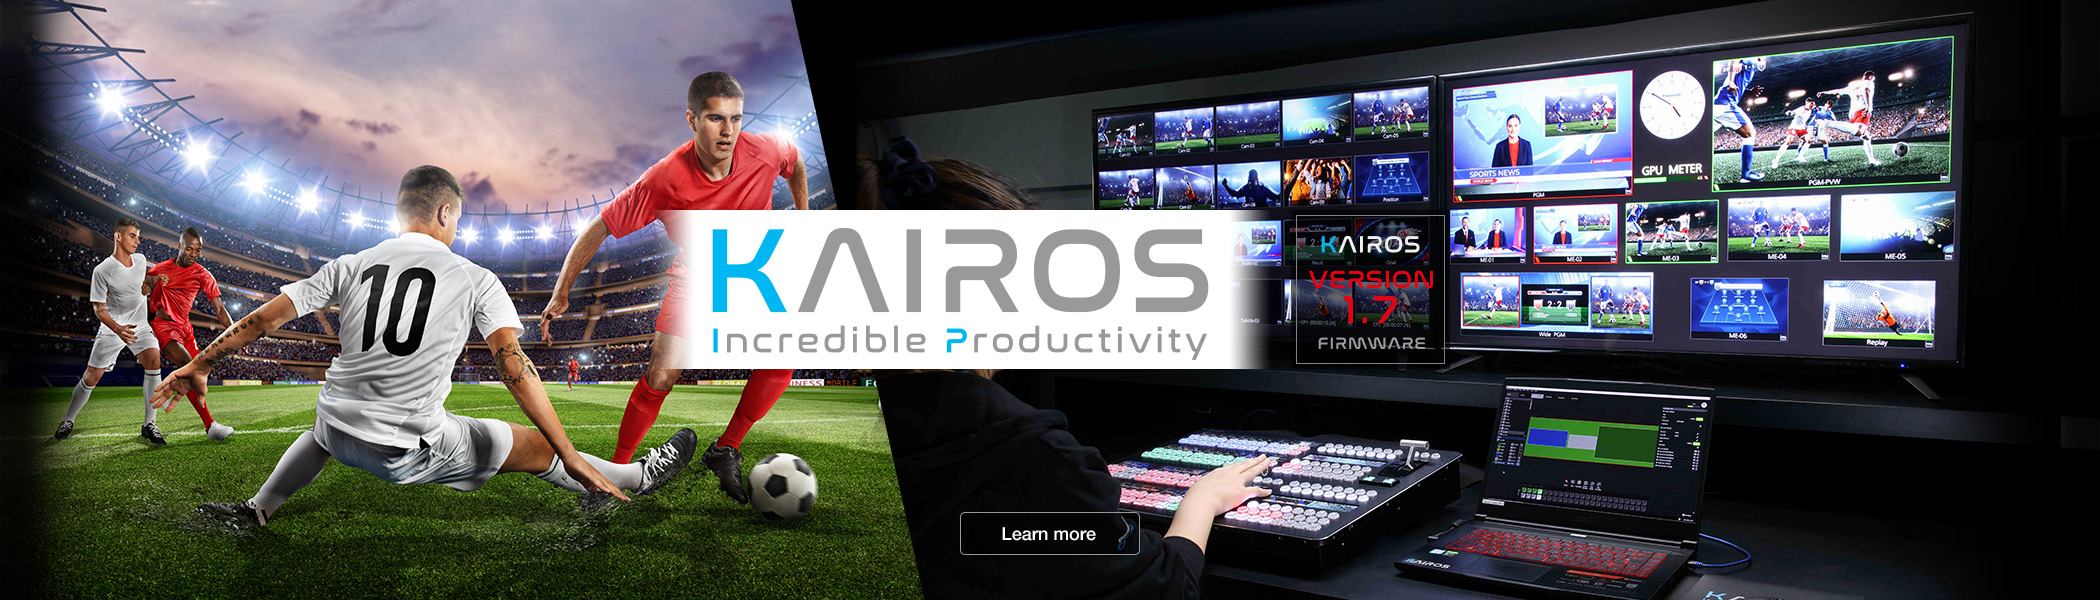 KAIROS Incredible Productivity IT/IP Centric Live Video Processing Platform